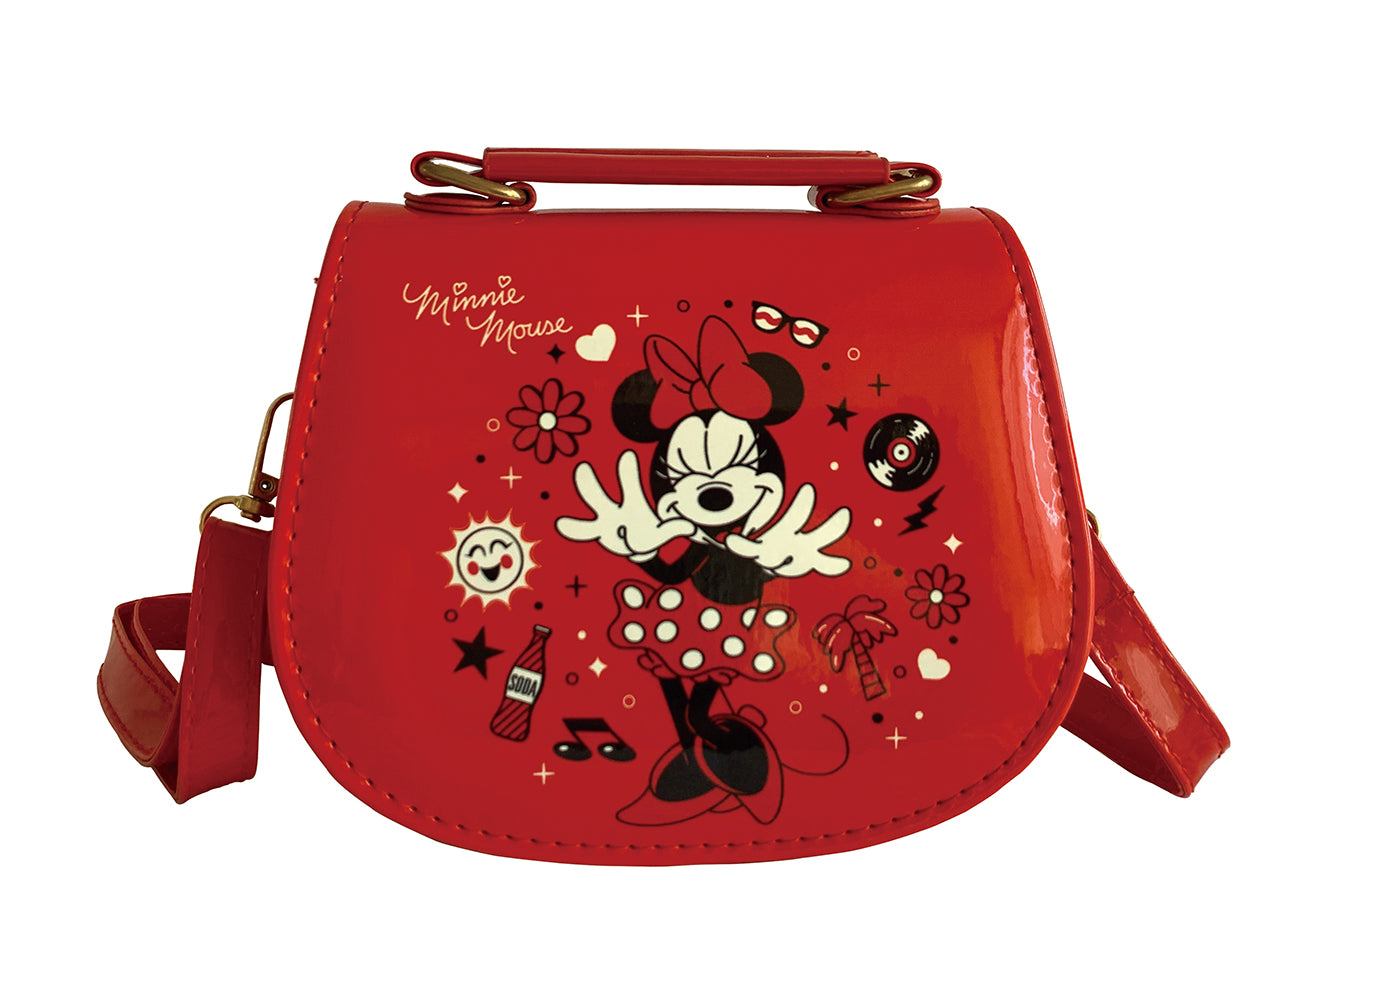 Minnie Mouse - Kids handbag DIS209 - Red-4